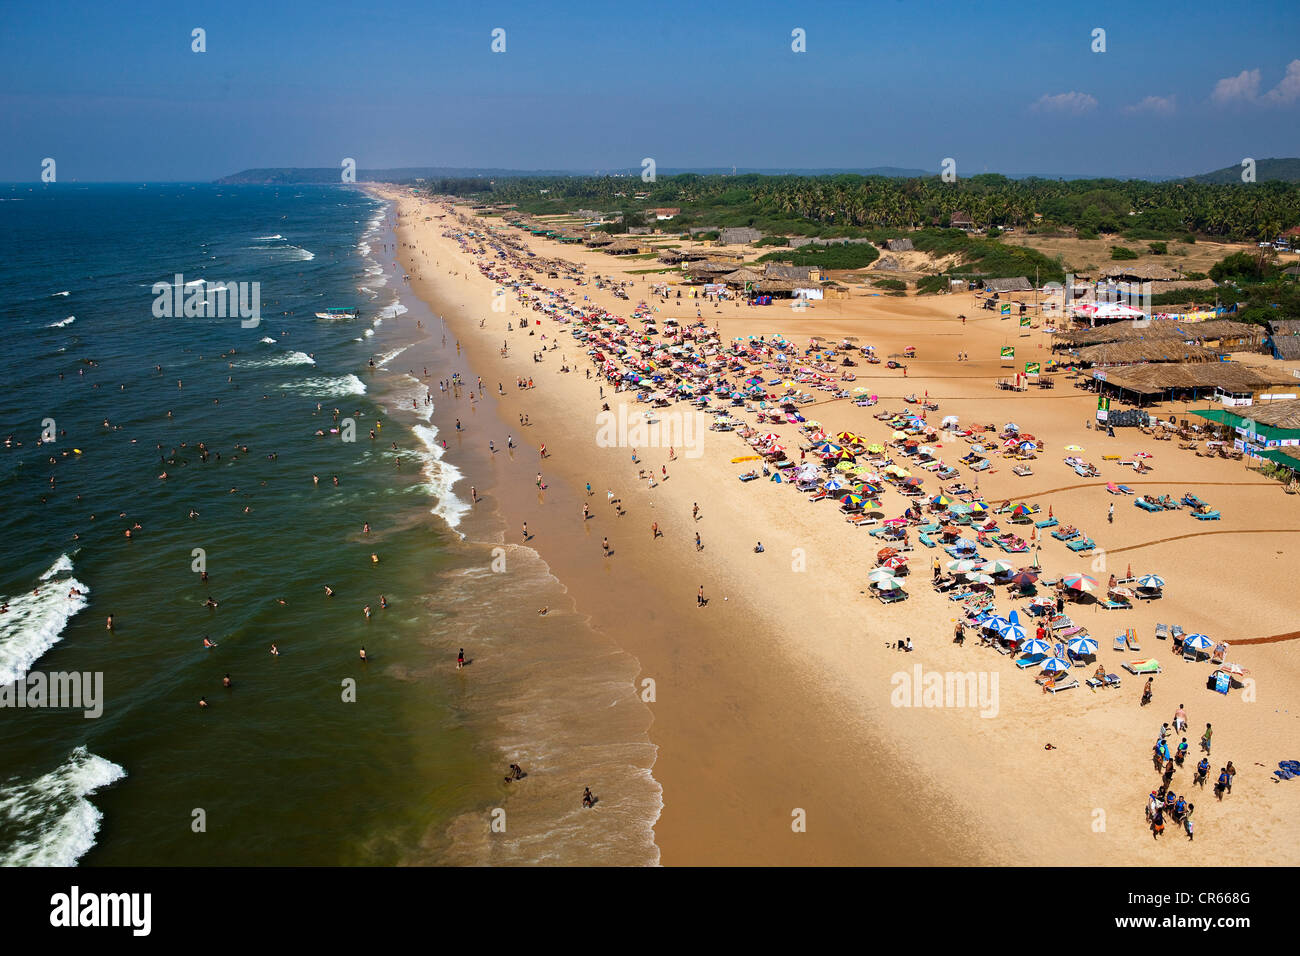 India, Goa State, Candolim, the beach (aerial view) Stock Photo